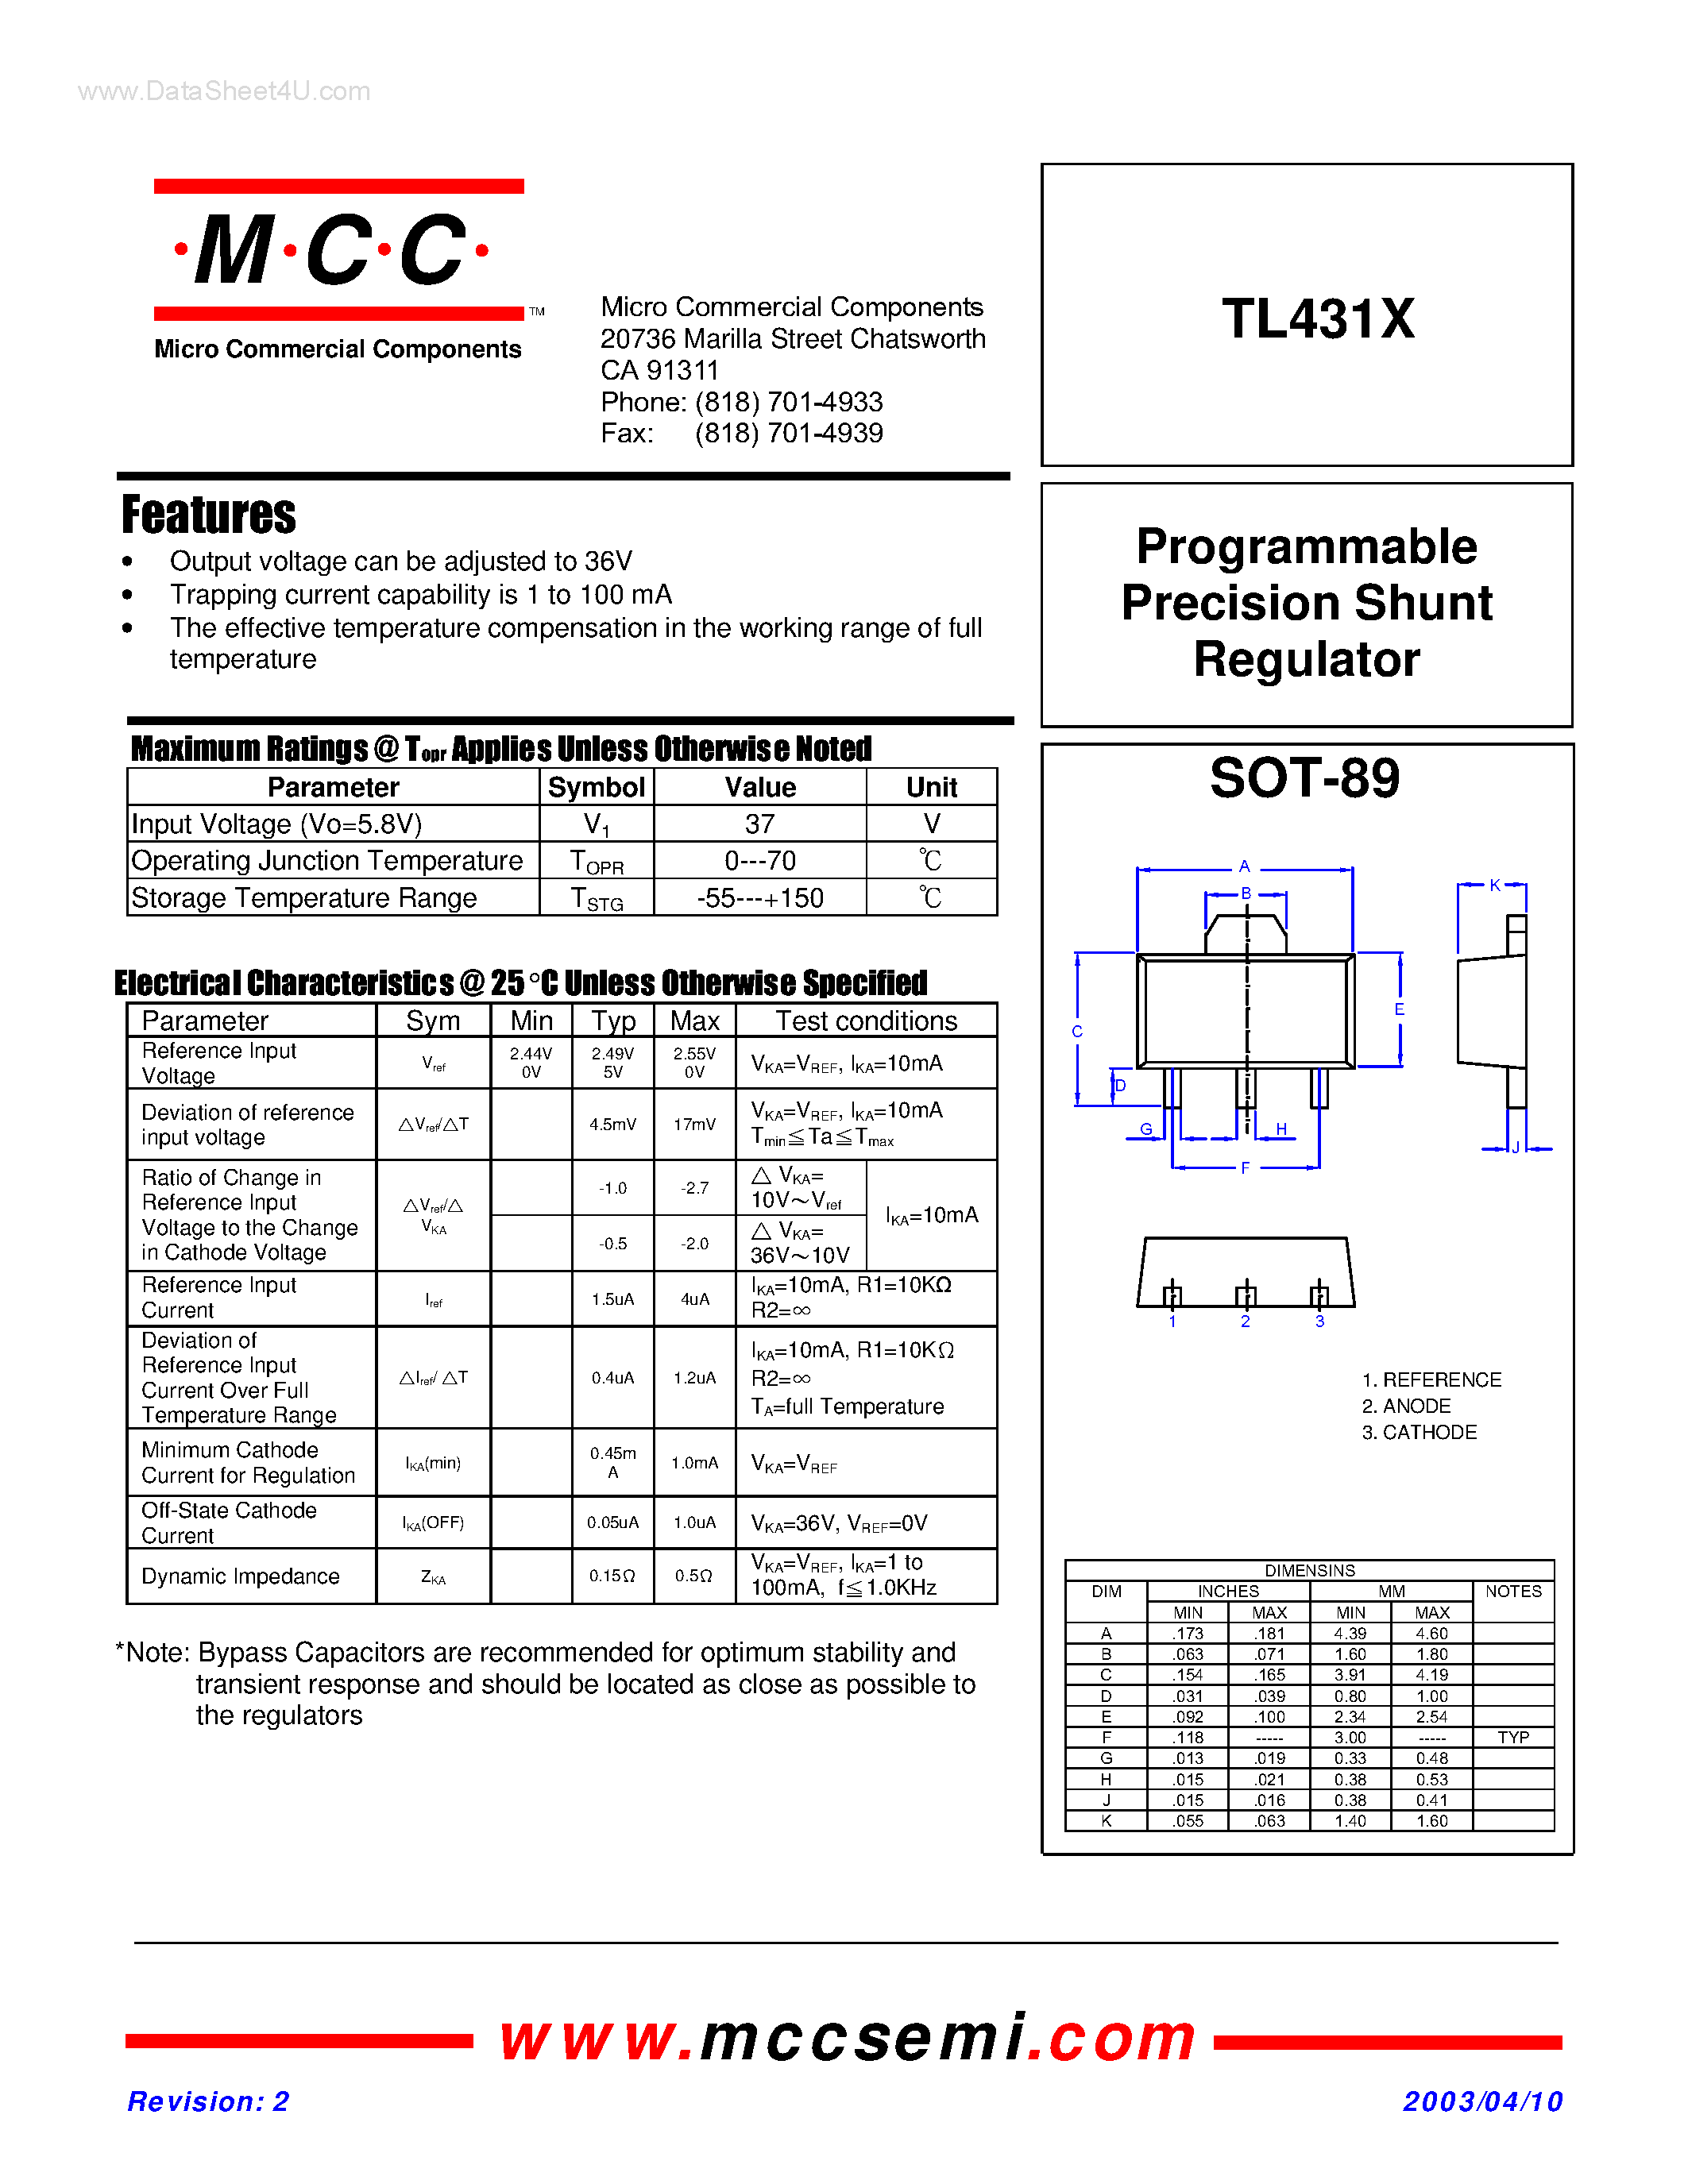 Datasheet TL431X - Programmable Precision Shunt Regulator page 1